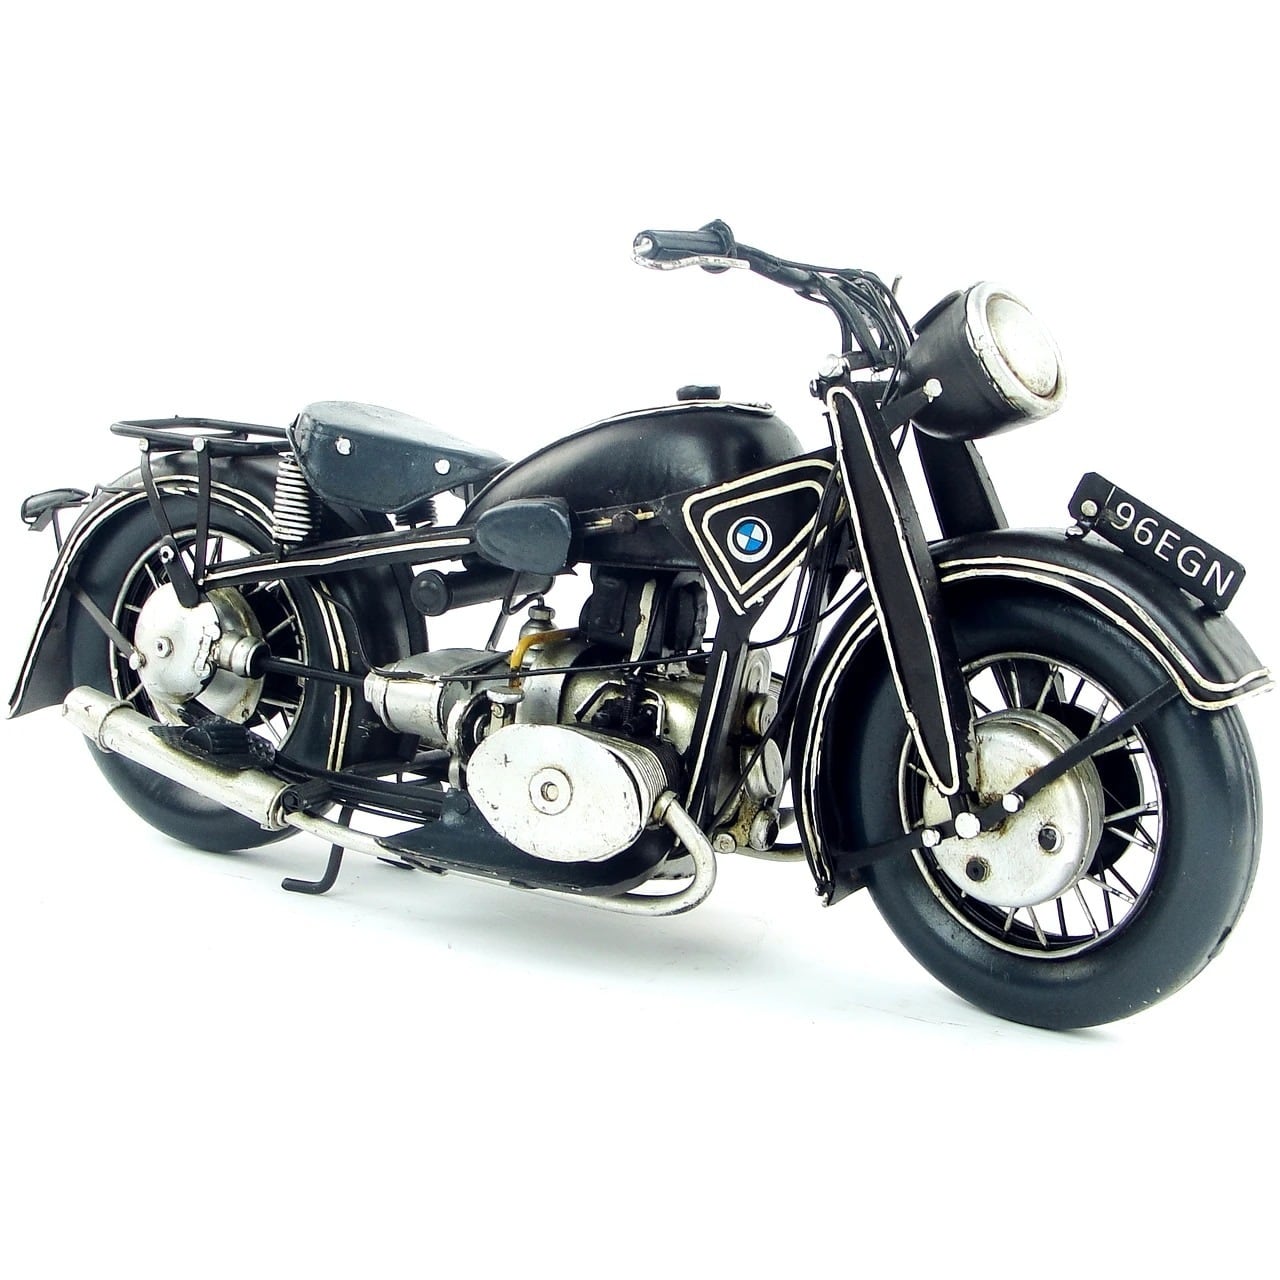 American motorcycle バイク モーターサイクル おもちゃ